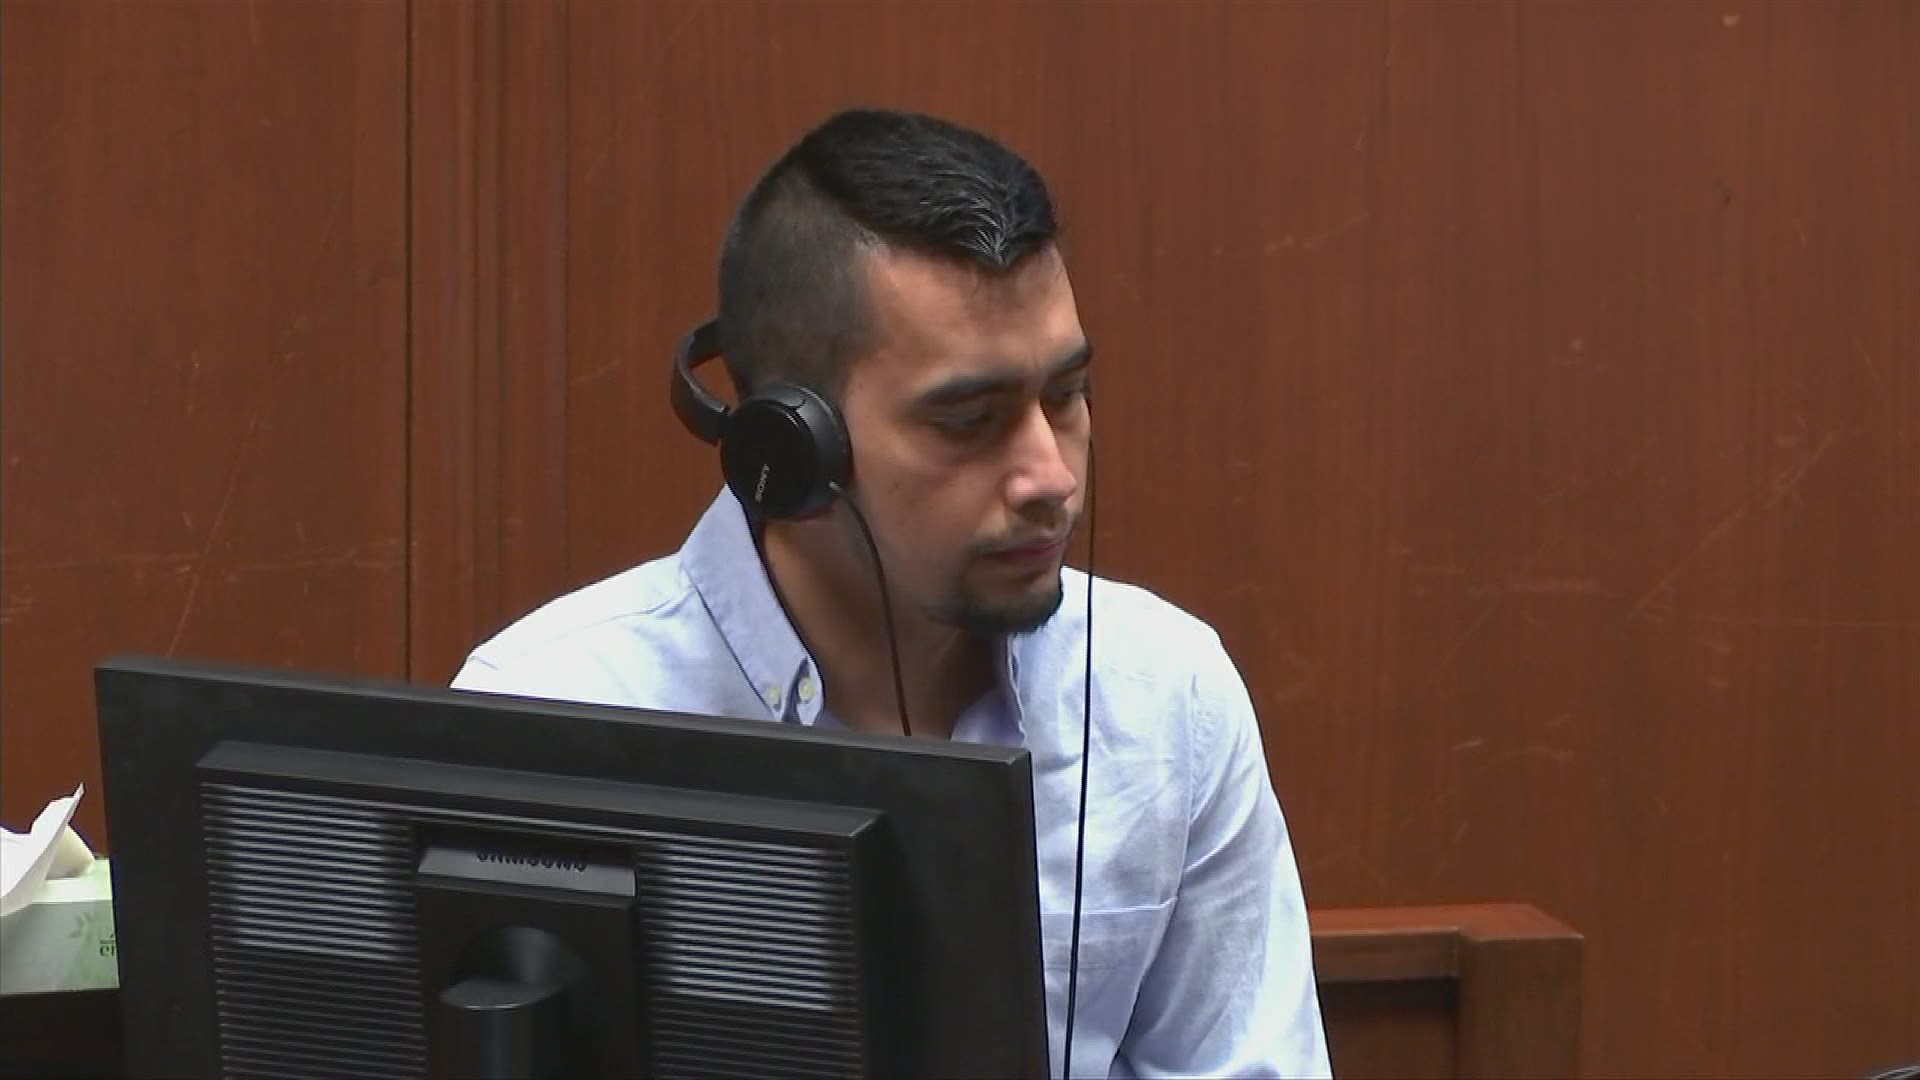 Defense cross-examines Cristhian Bahena Rivera on the witness stand.